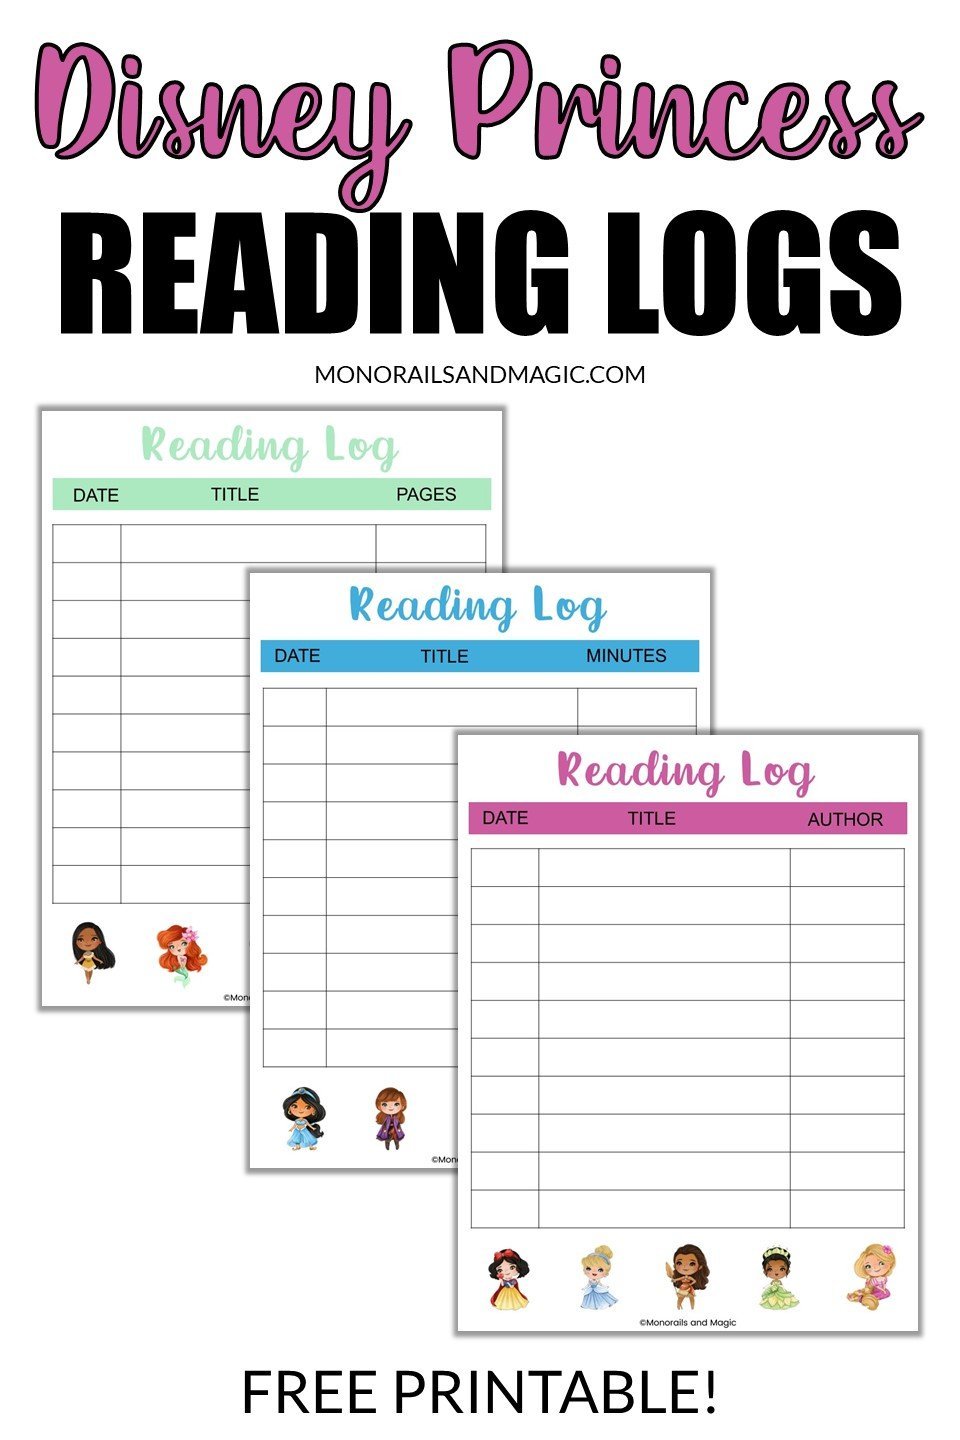 Free printable Disney princess themed reading logs.